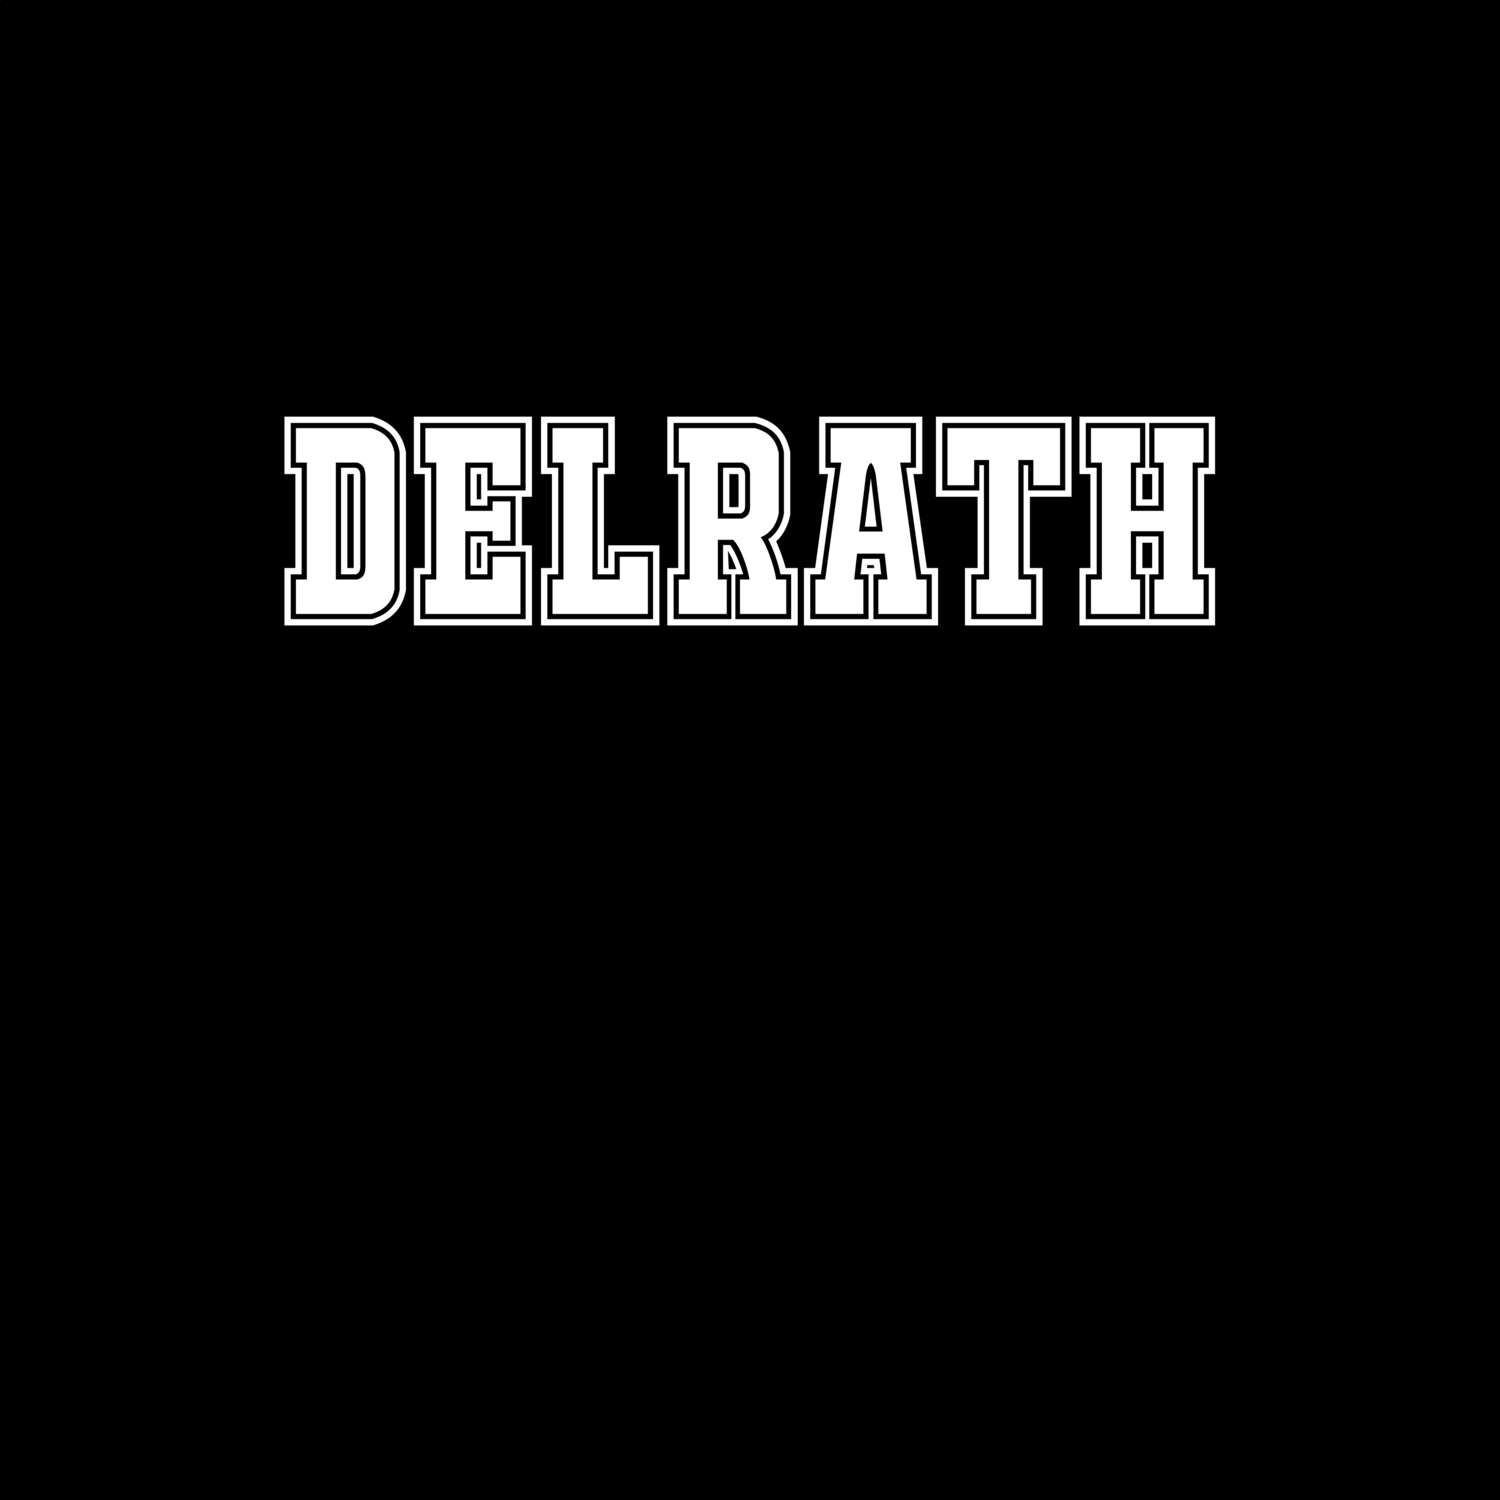 Delrath T-Shirt »Classic«